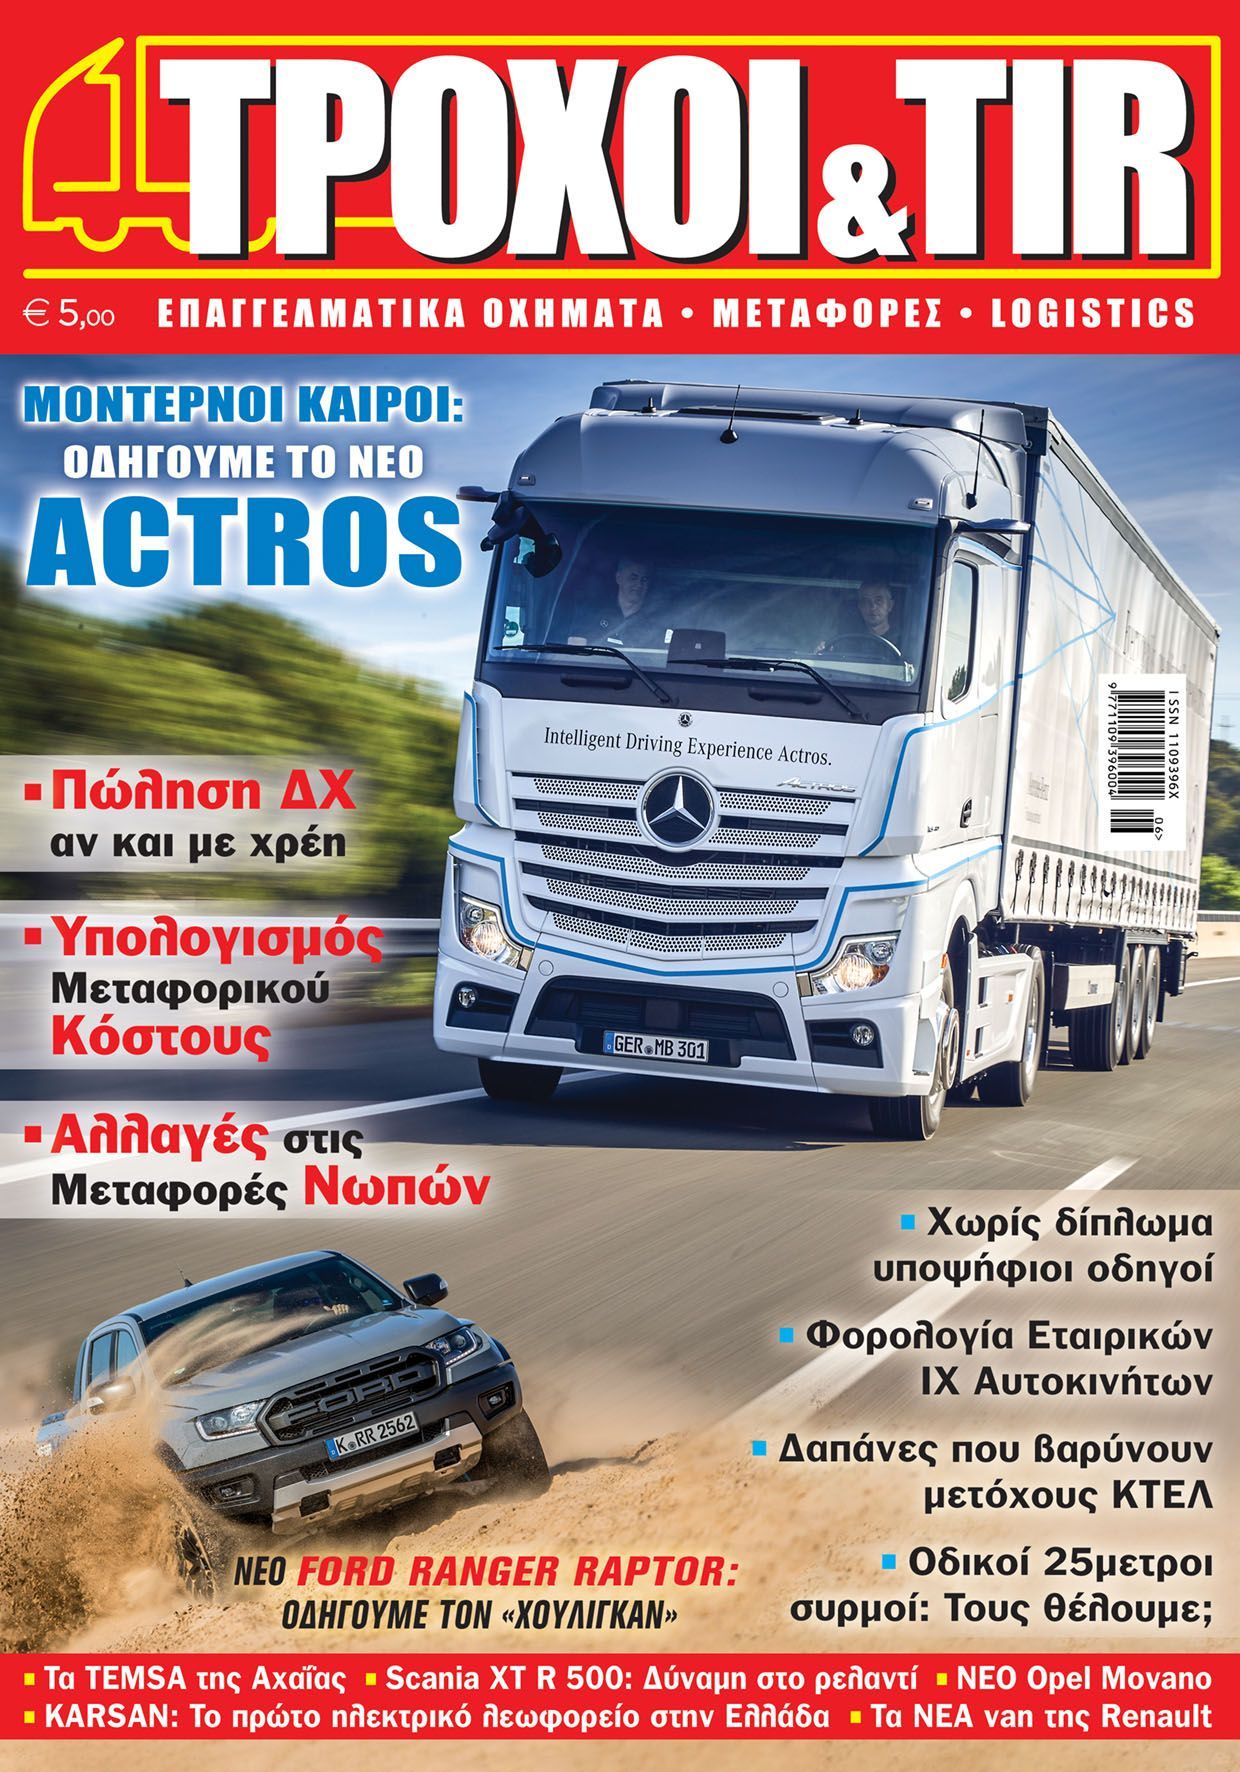 Troxoikaitir issue 374 june 2019 cover